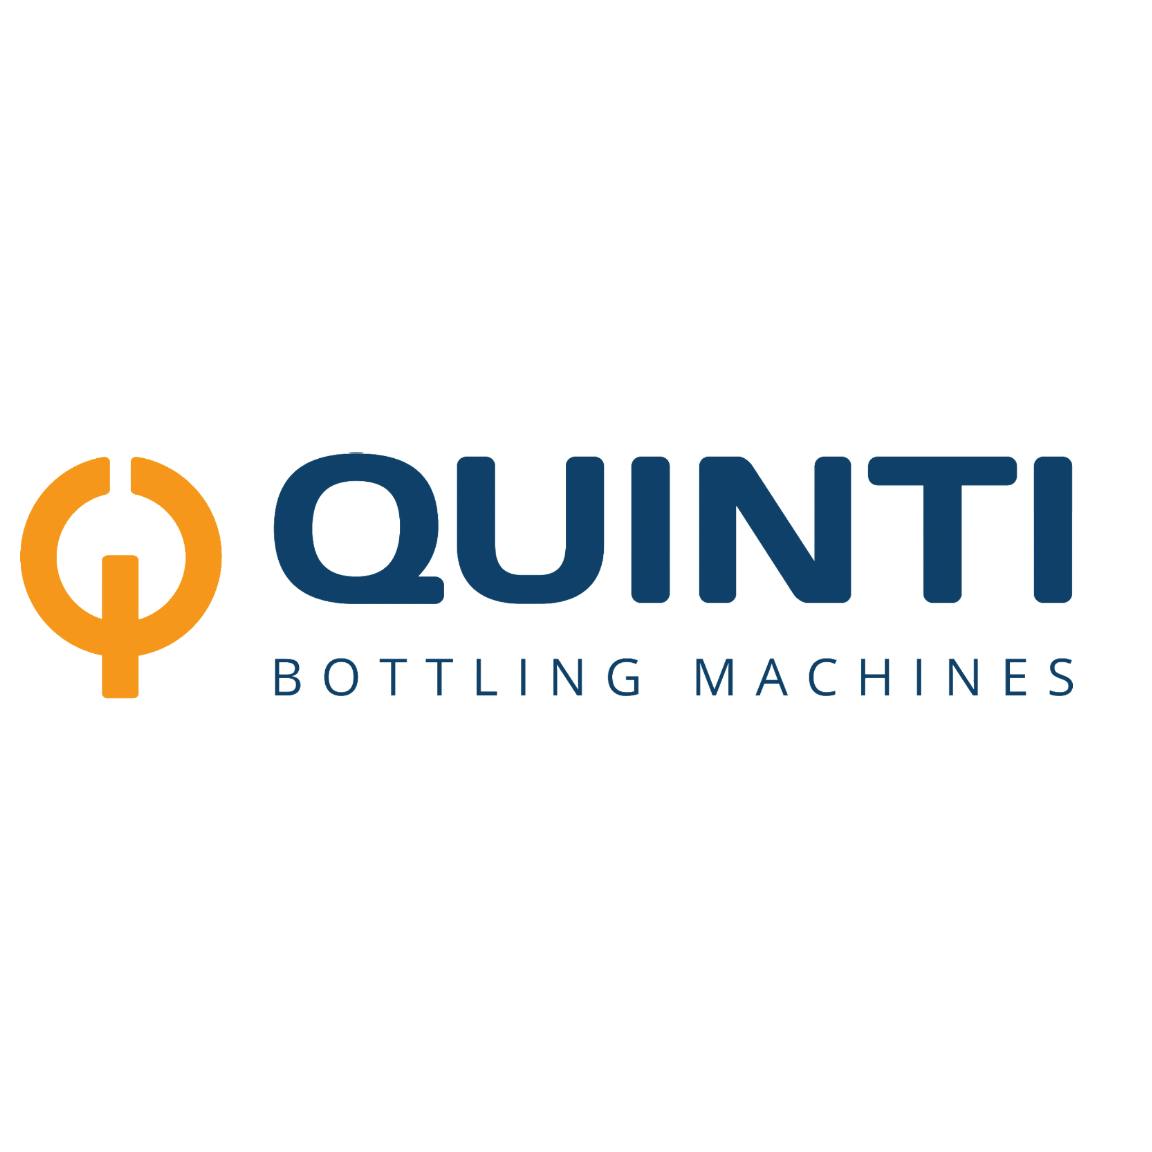 A Quinti Bottling Machines logo, in blu version and a big orange letter Q